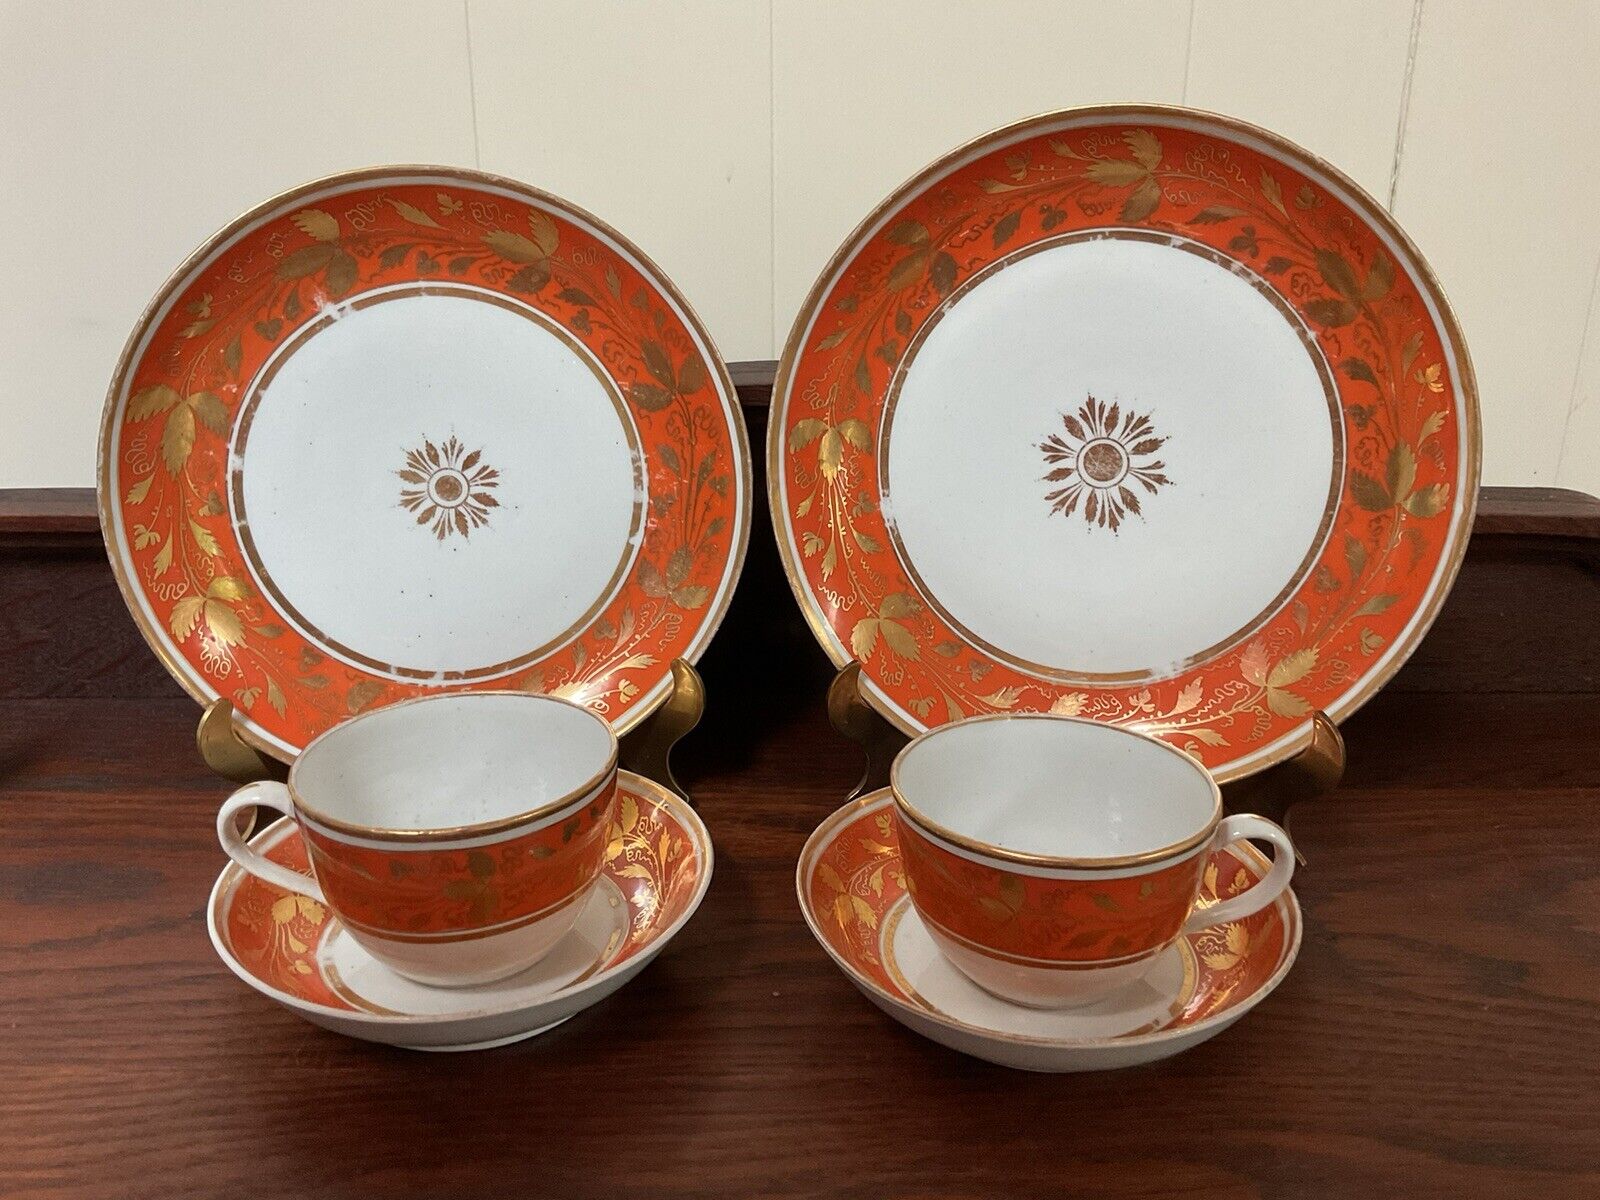 2 Sets Antique c1800 New Hall England Porcelain Teacup & Saucer & Plate Pat.670